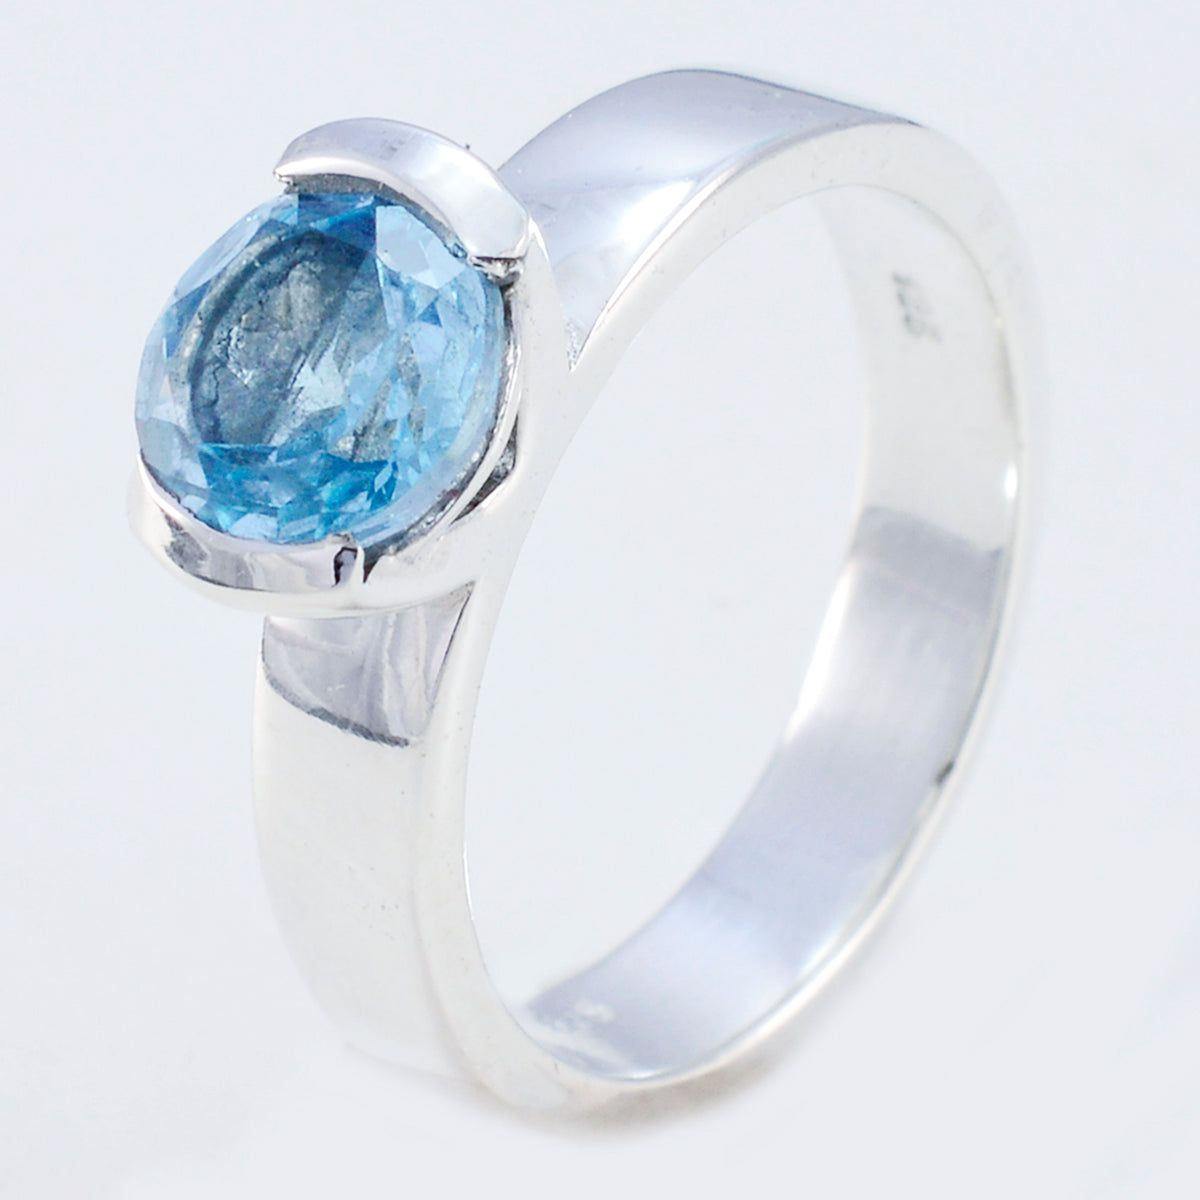 Riyo Symmetrical Gems Blue Topaz Silver Ring Jewelry Shop Near Me